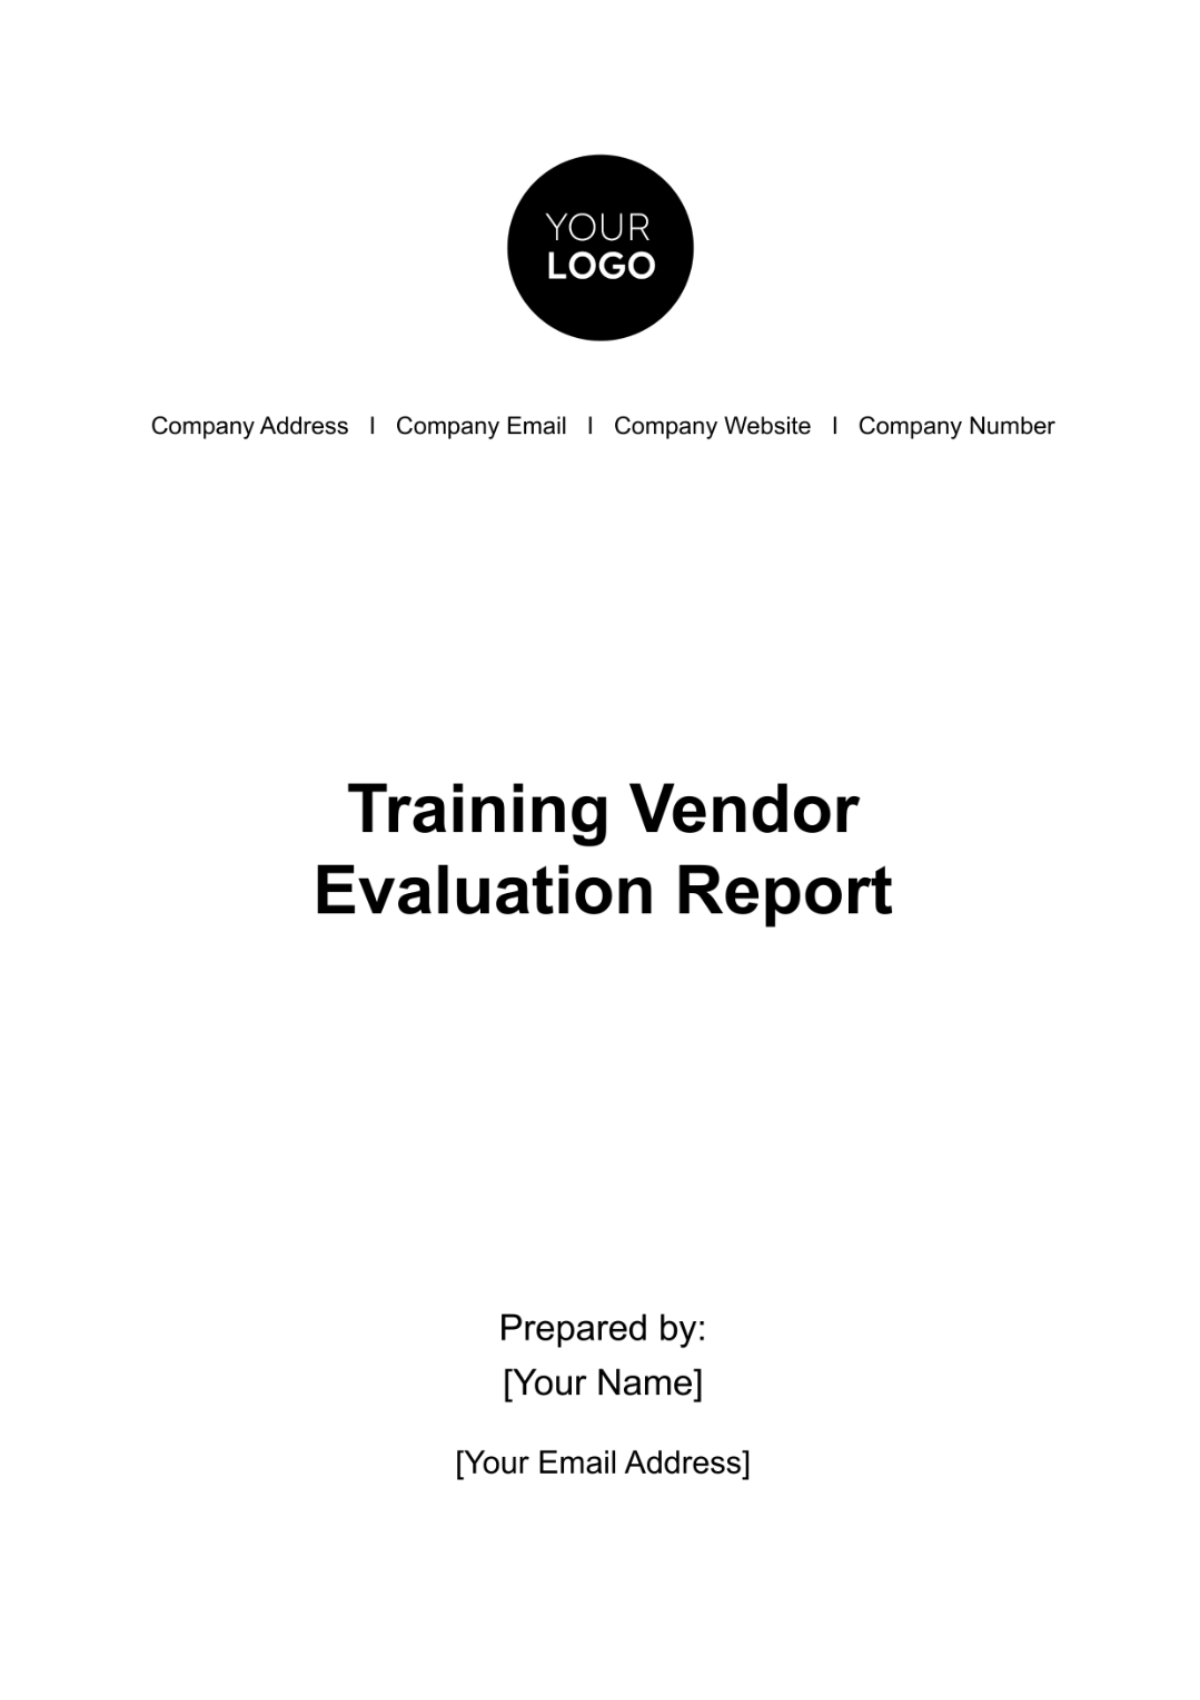 Free Training Vendor Evaluation Report HR Template